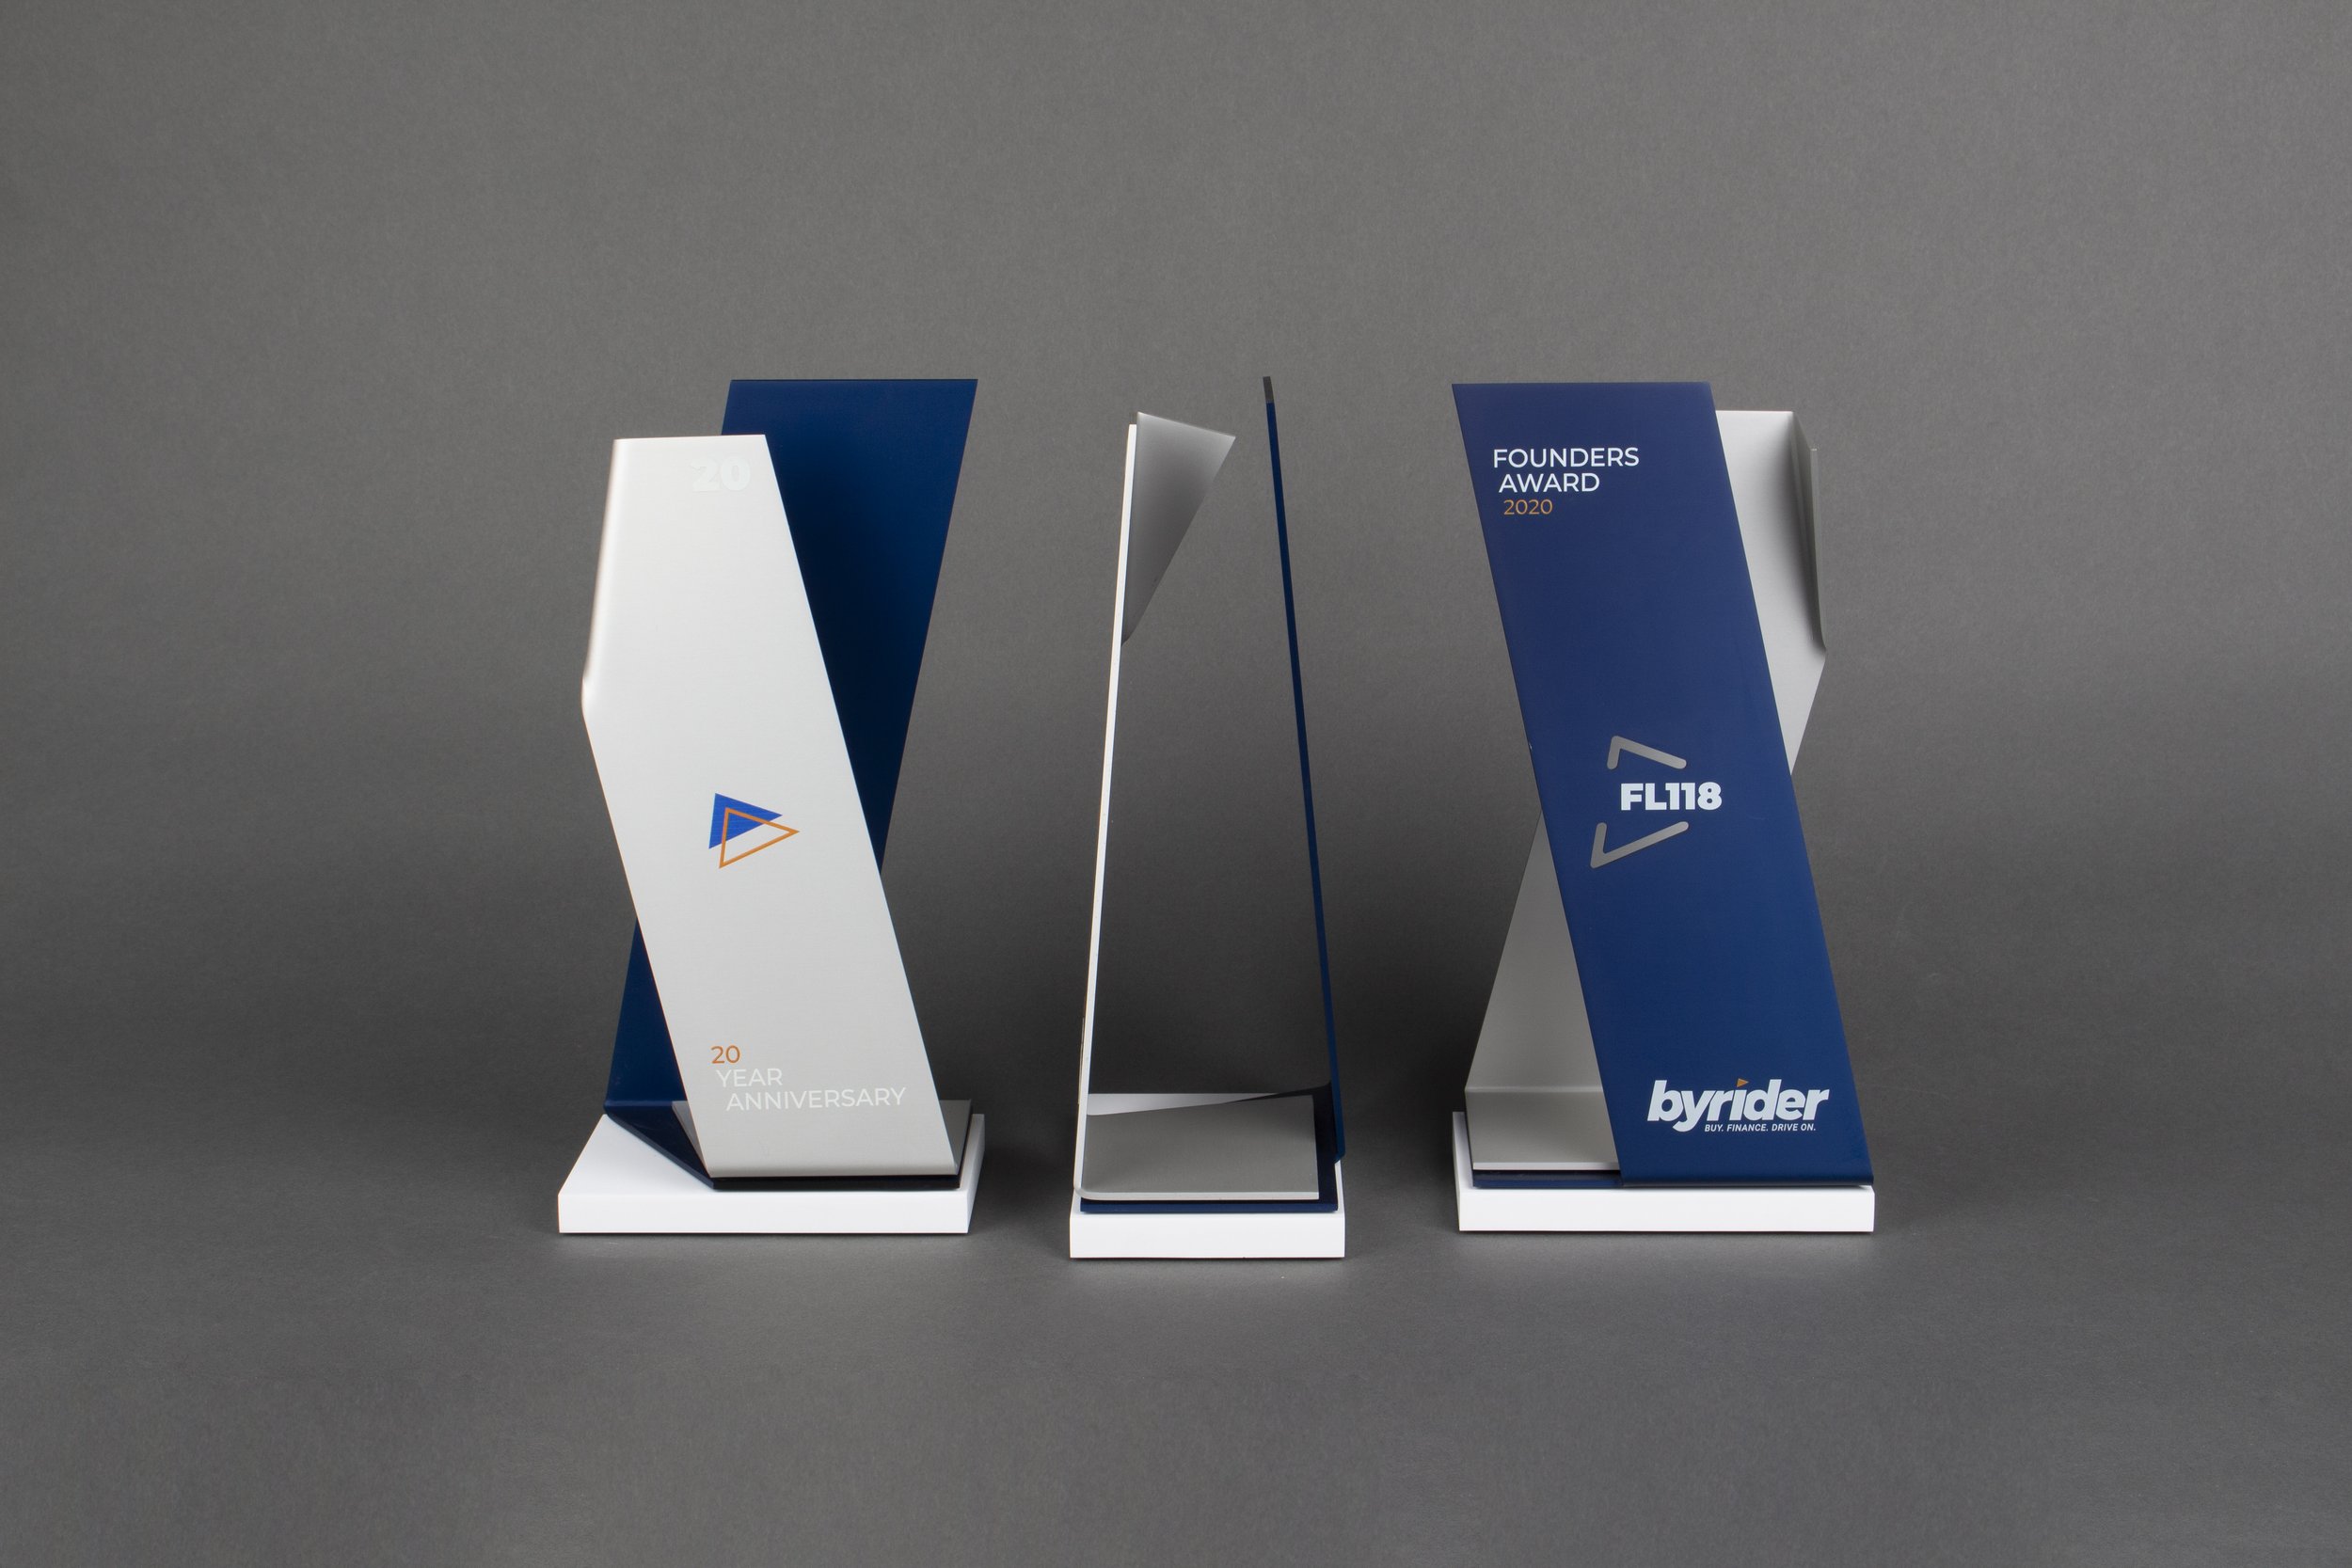 byrider annual conference awards custom design 18.jpg